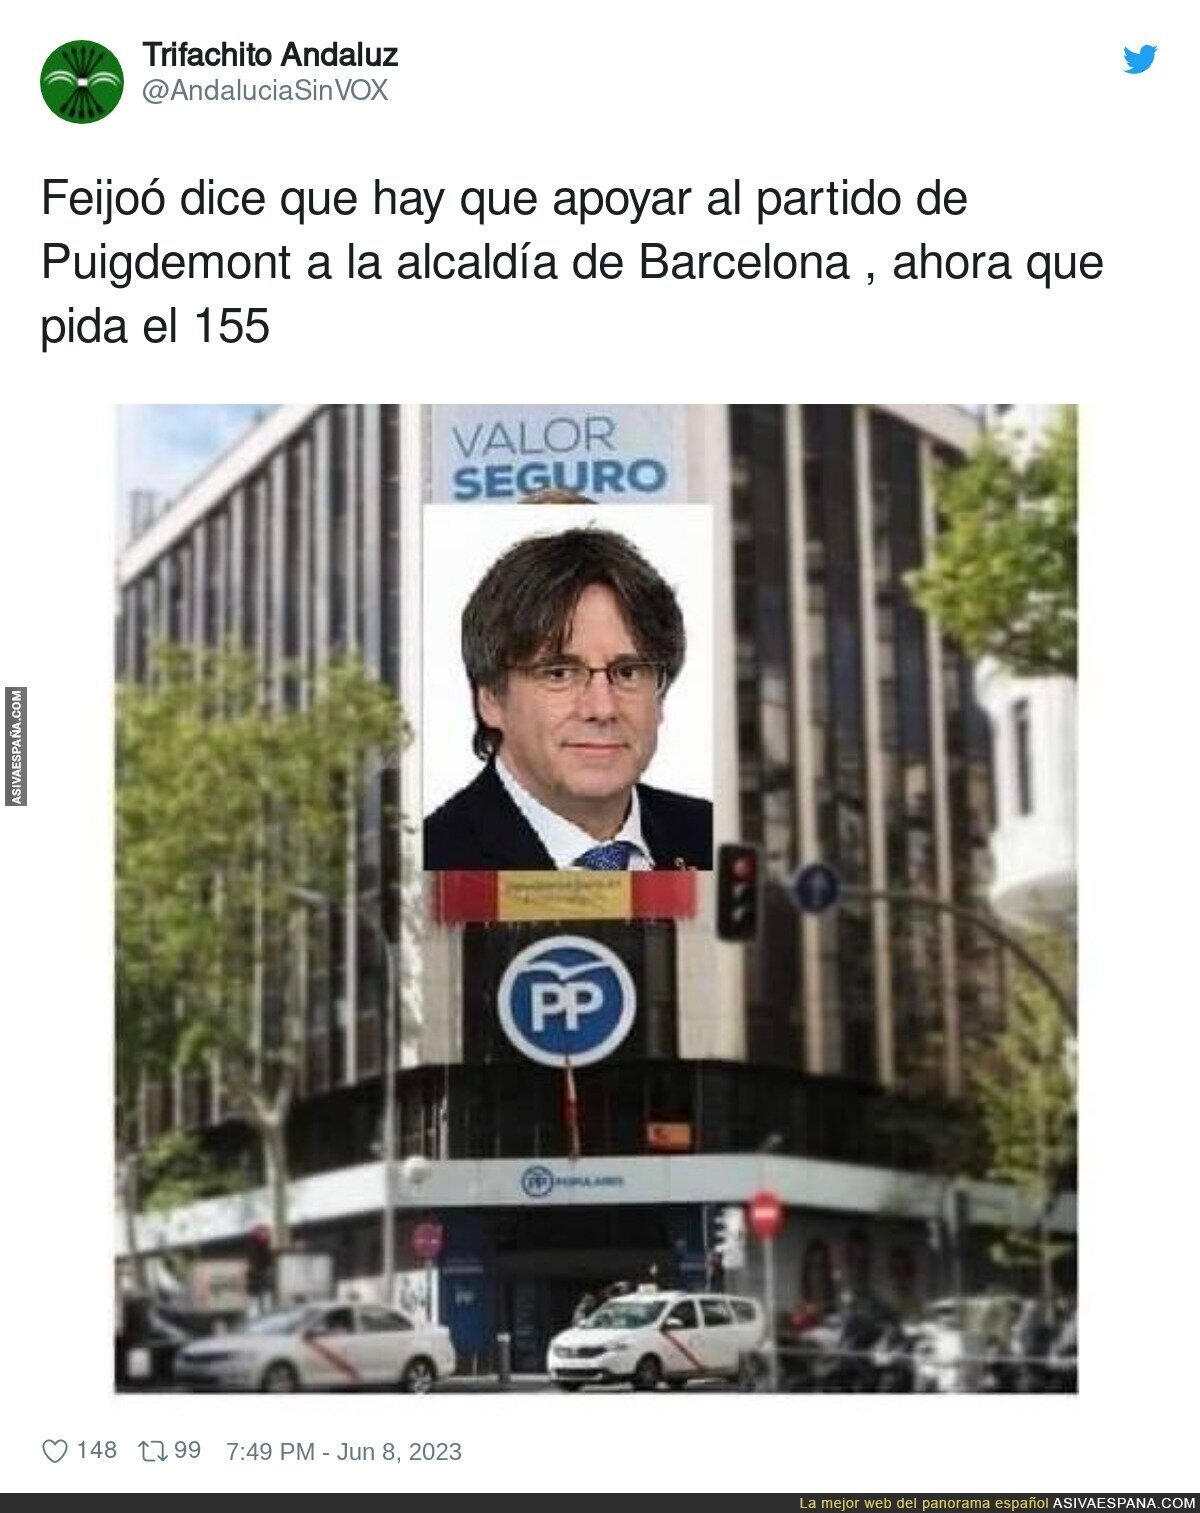 Feijoo, ¡que te vote Puigdemont!